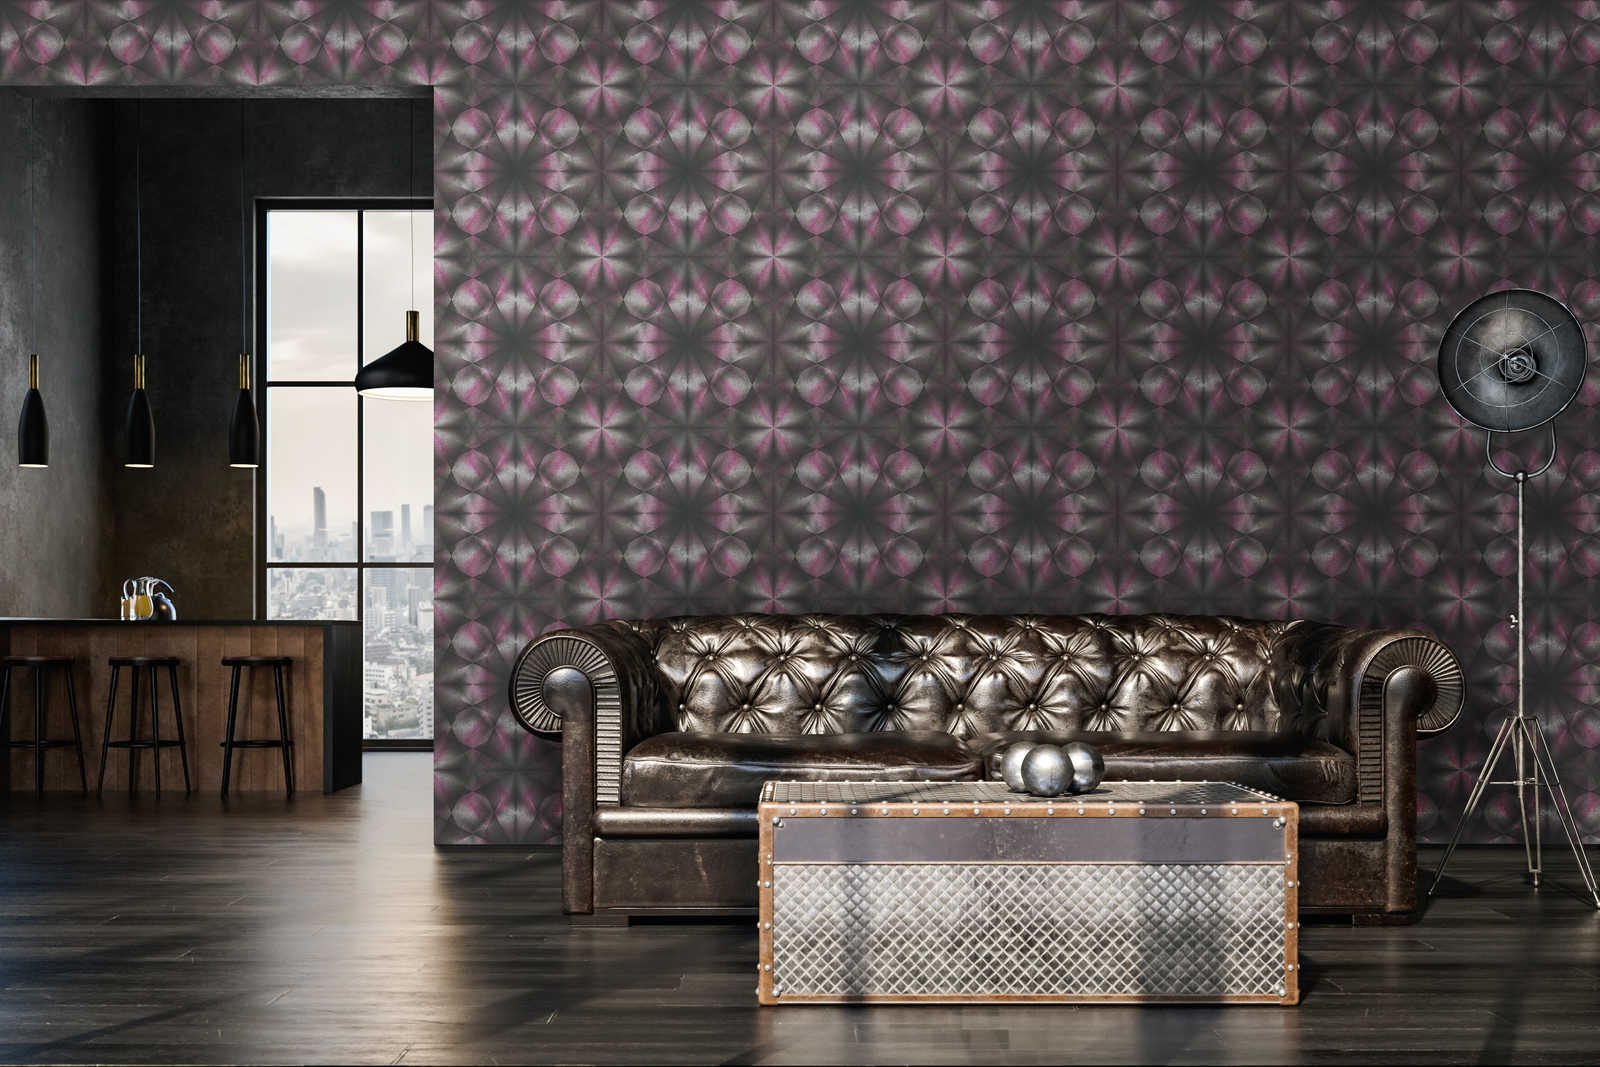             Design wallpaper with concrete look & graphic pattern - purple, grey, black
        